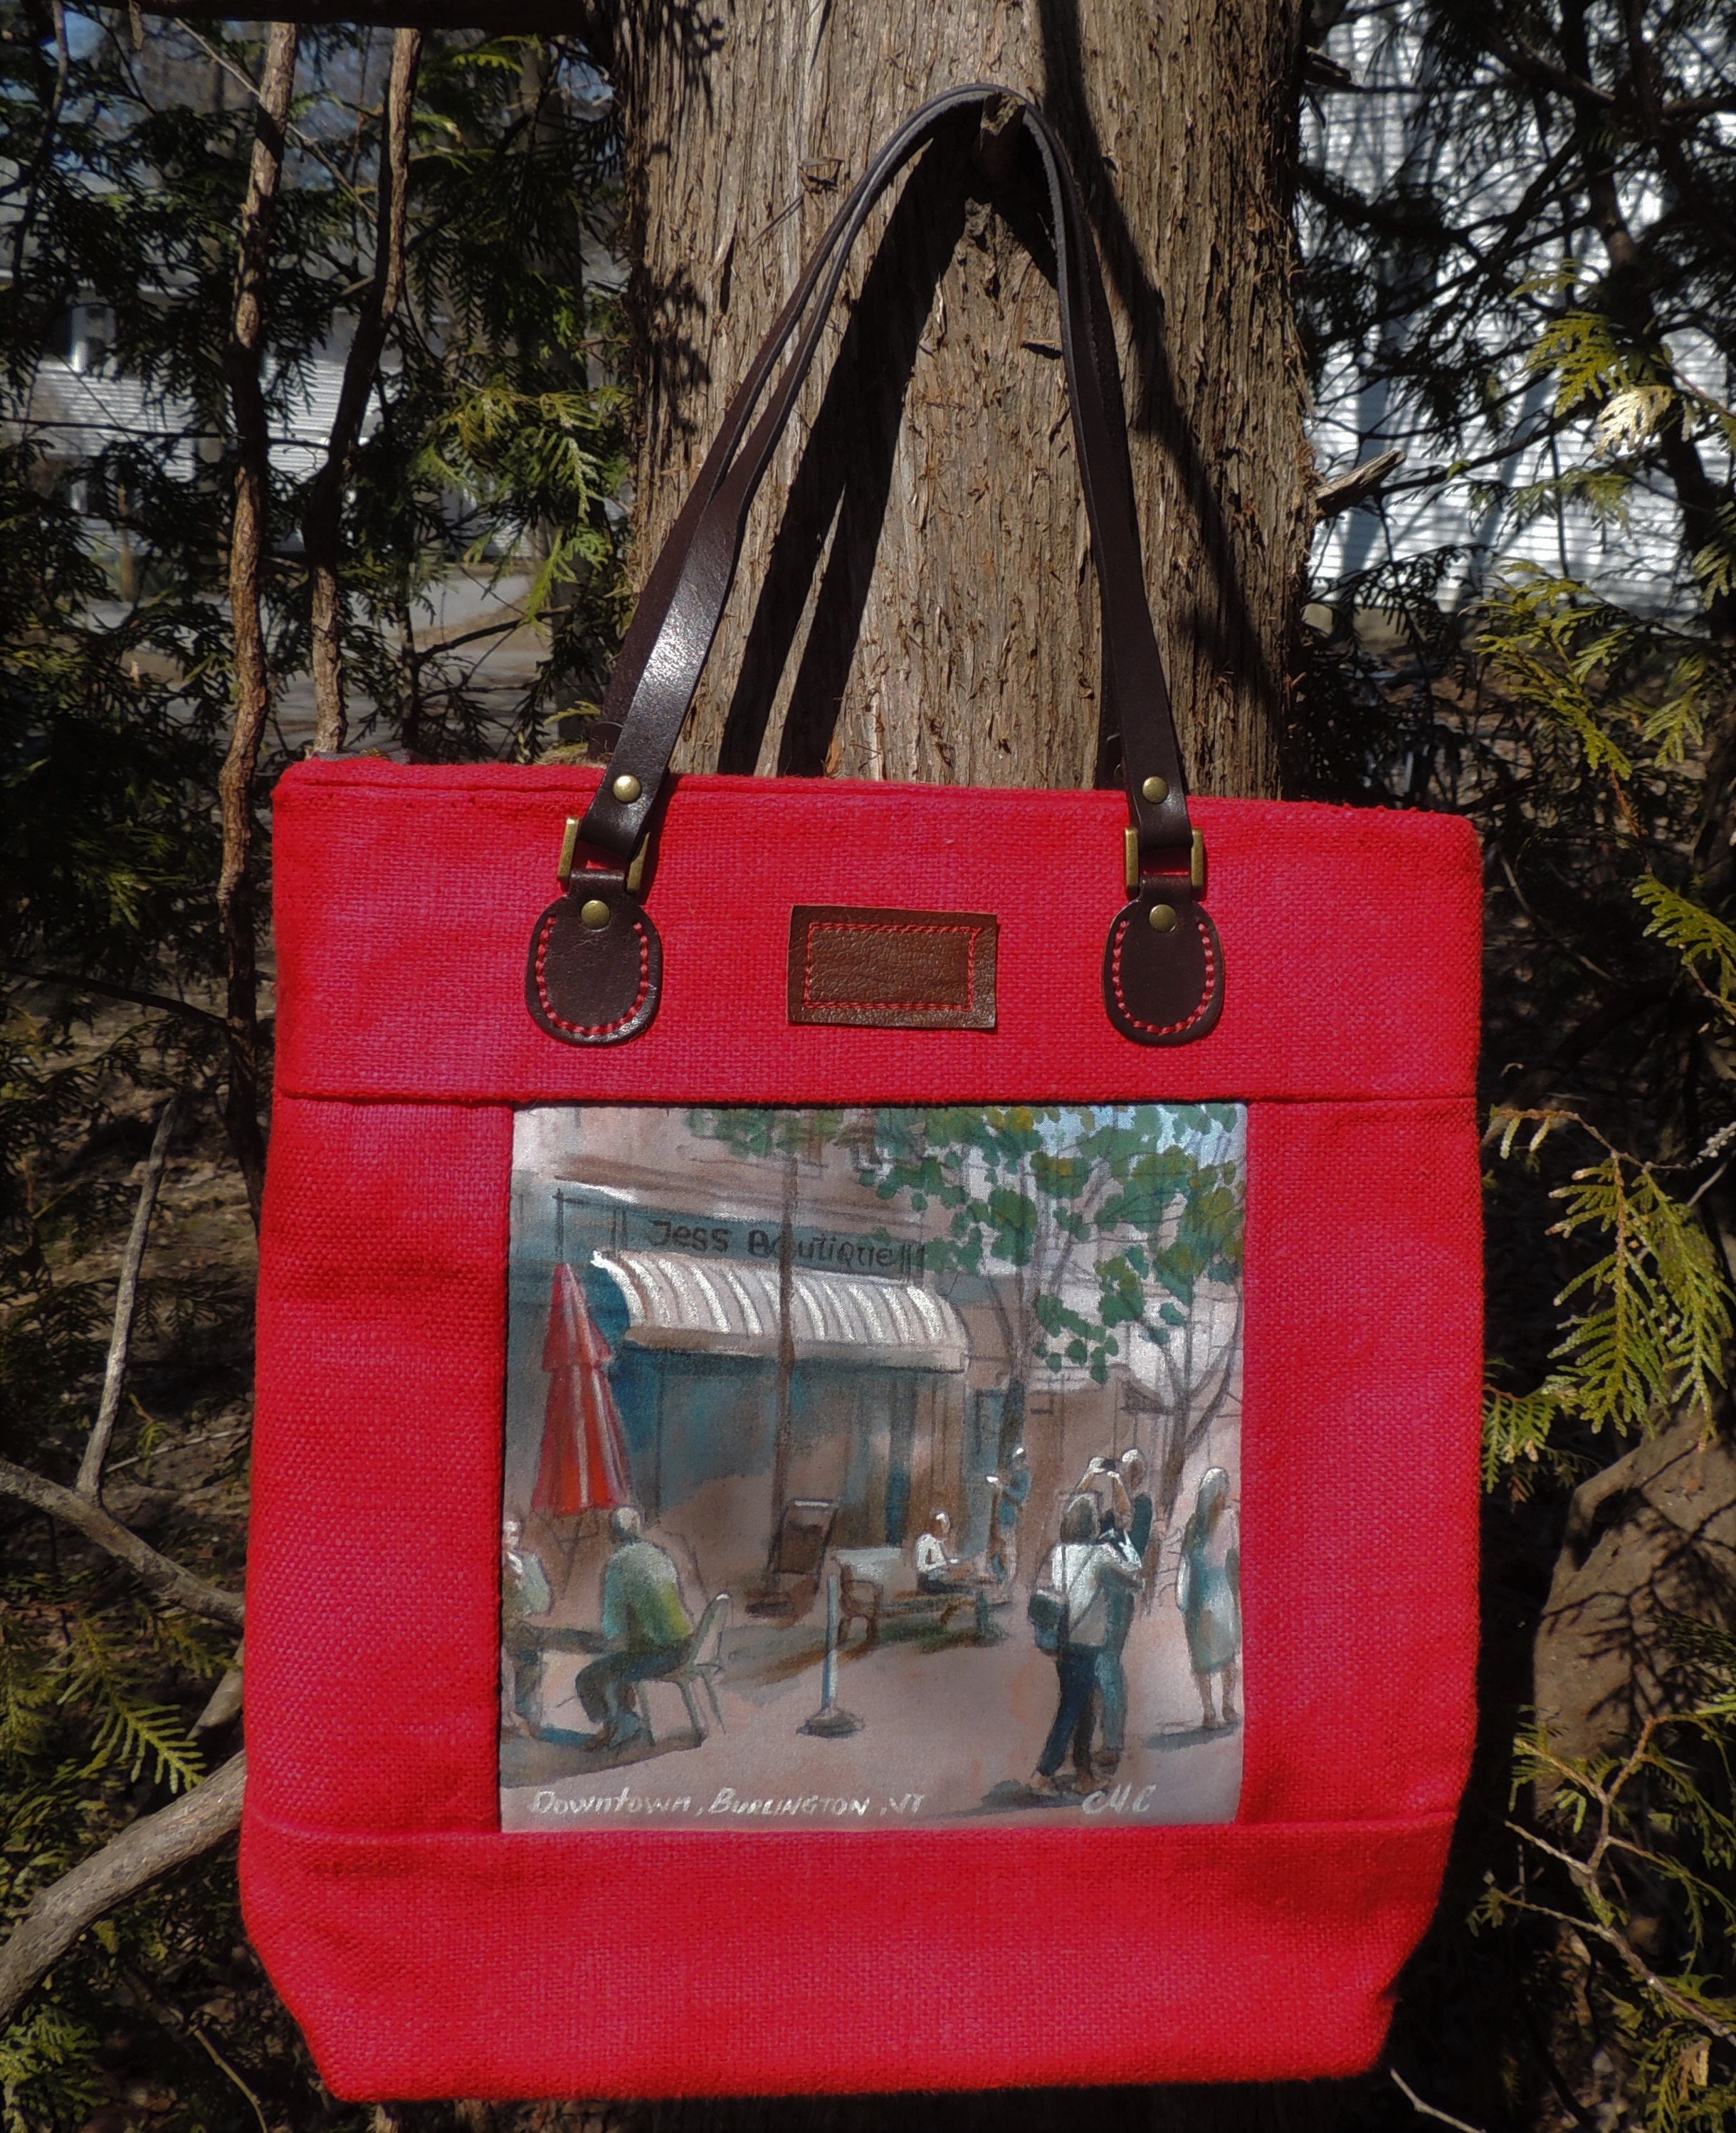 Women's Handbags & Purses for sale in Burlington, North Carolina